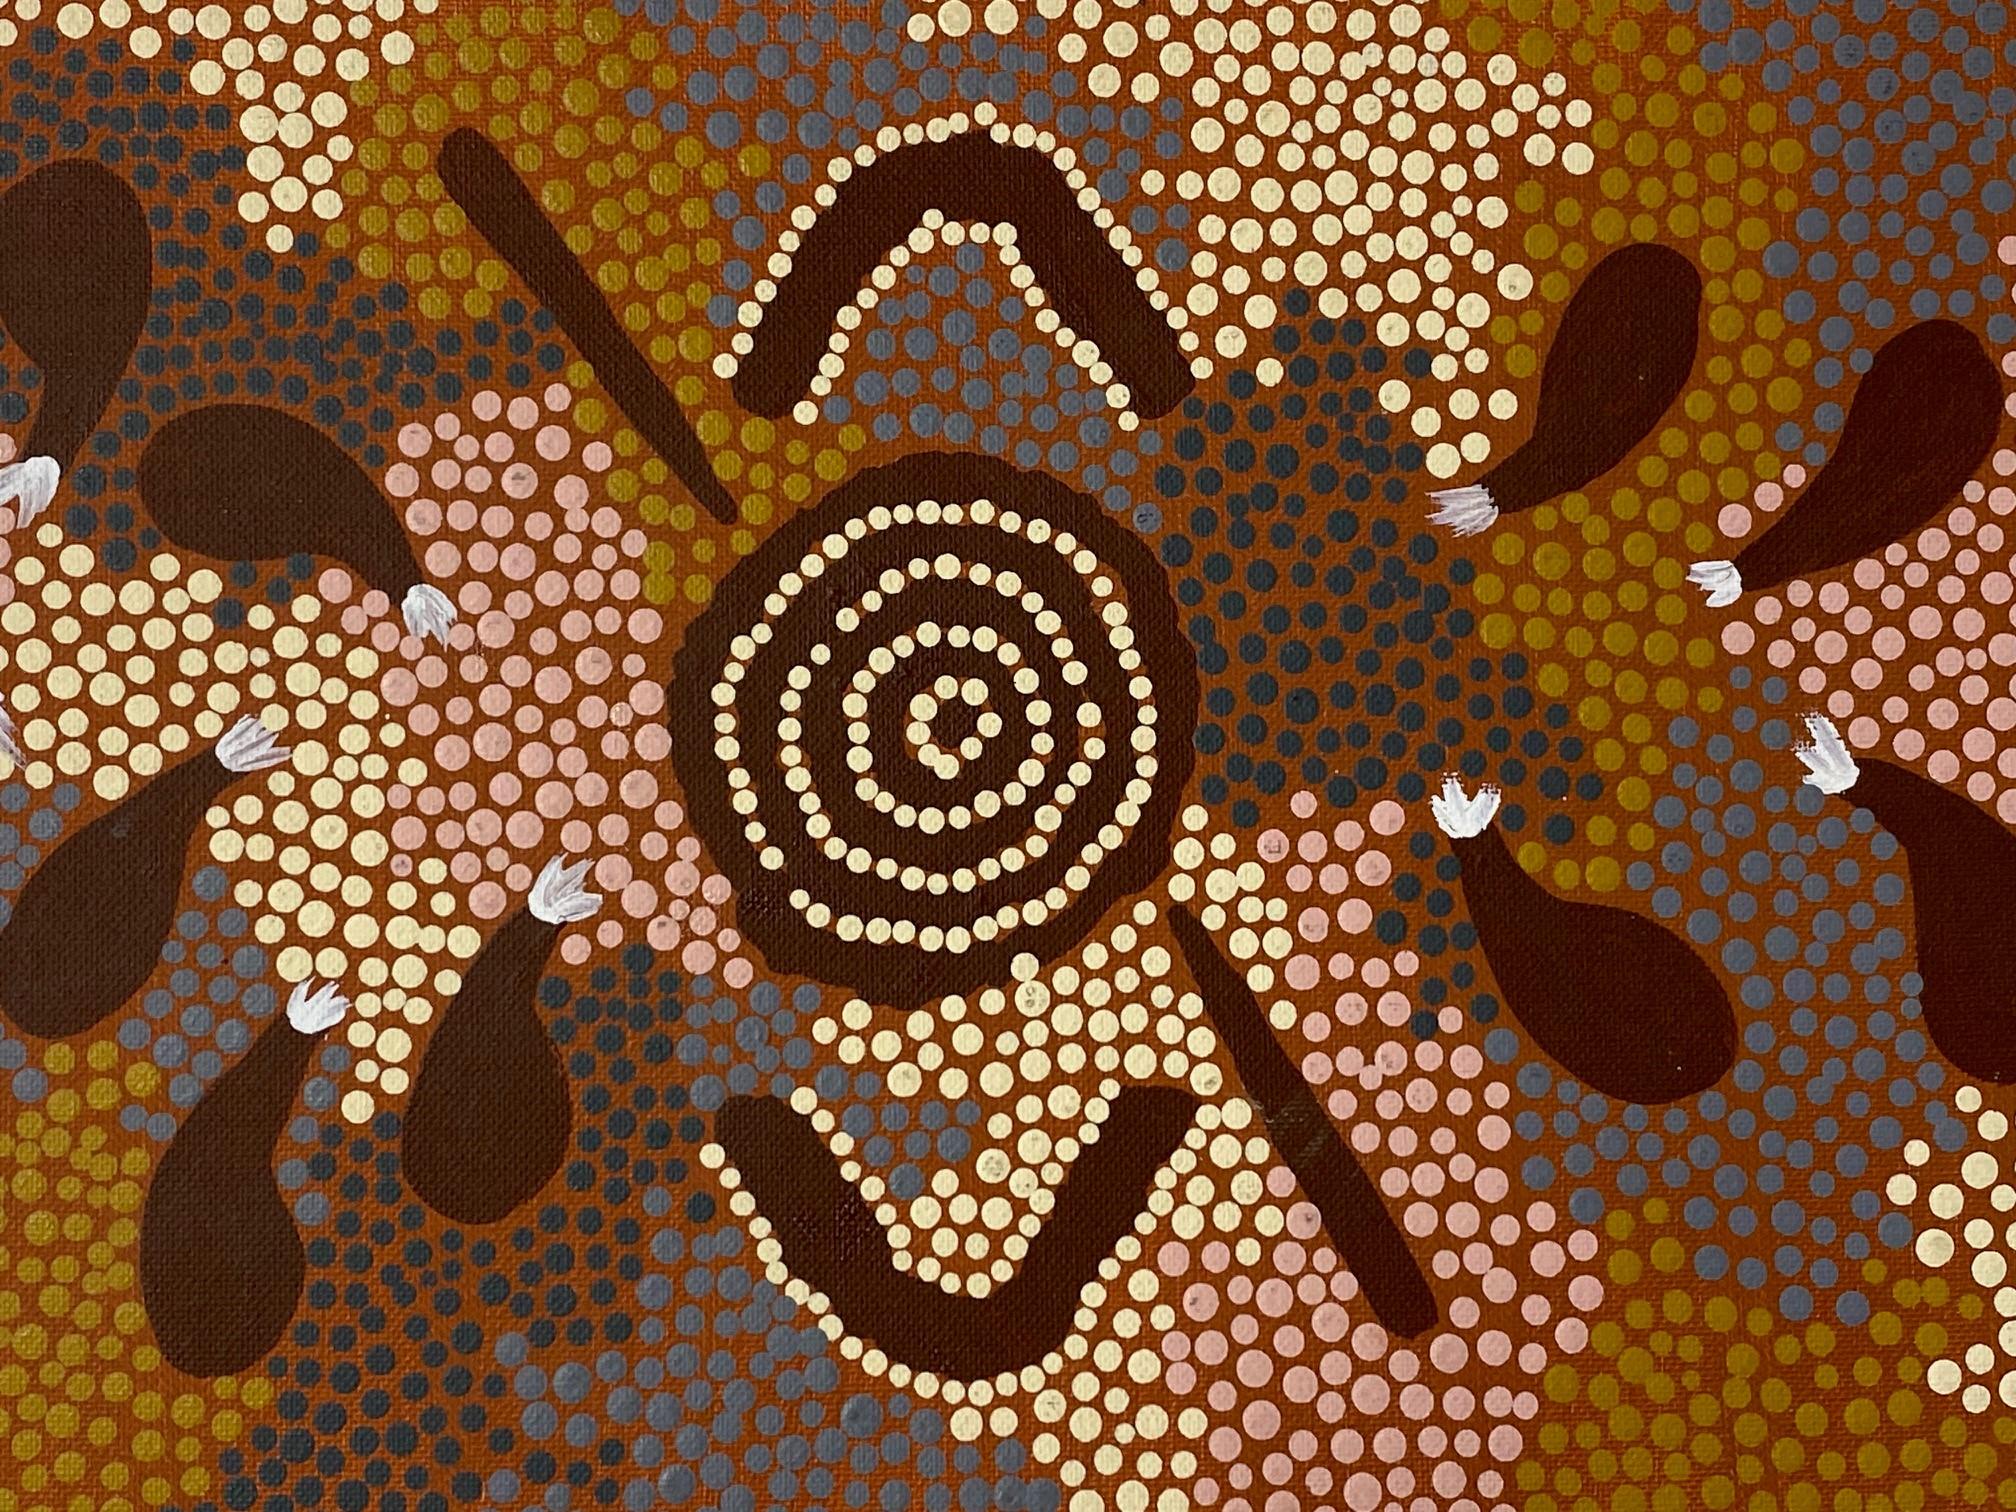 indigenous art facts